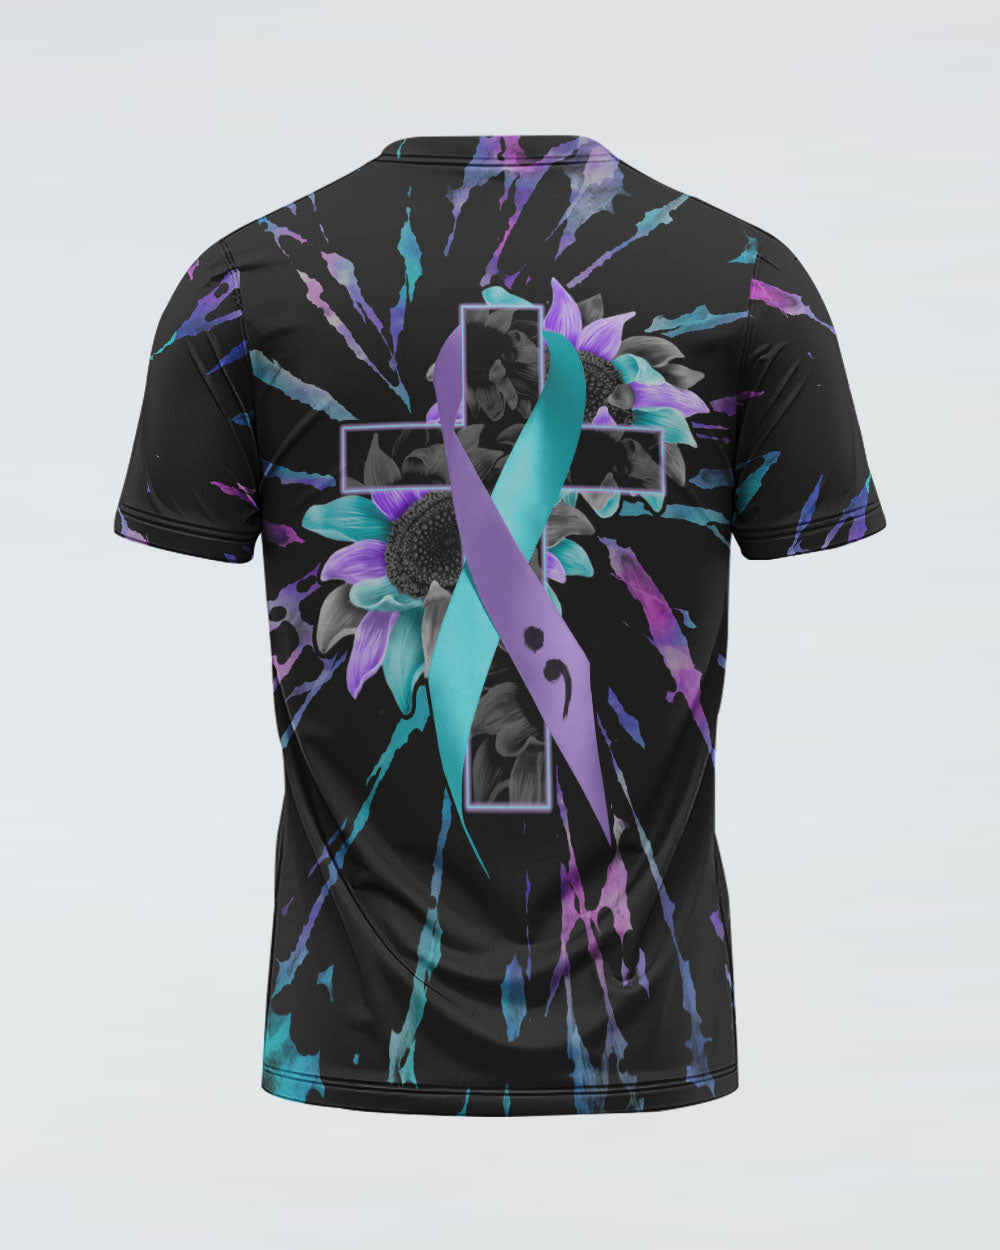 Sunflower Cross Ribbon Tie Dye Women's Suicide Prevention Awareness Tshirt